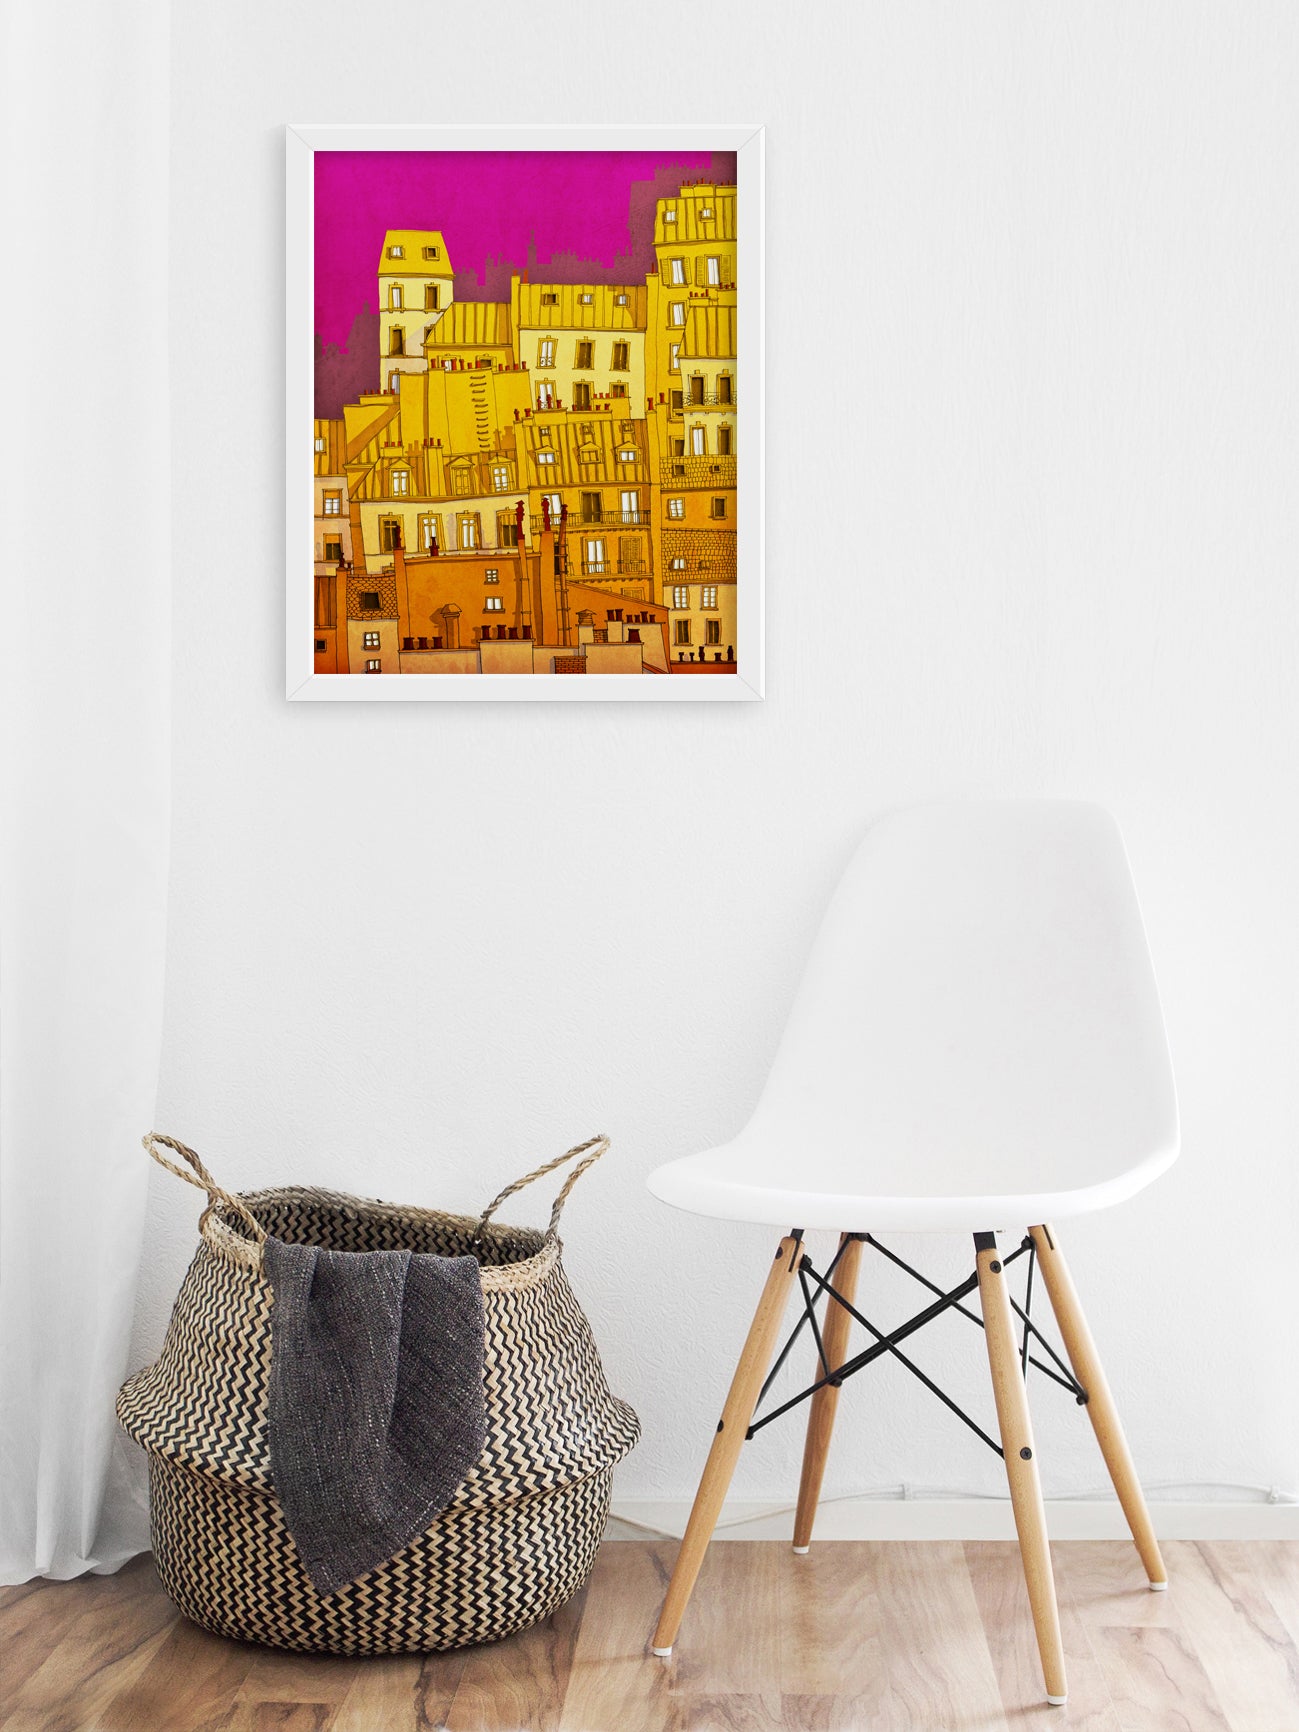 Paris, Montmartre (colored version) - Framed Art Print